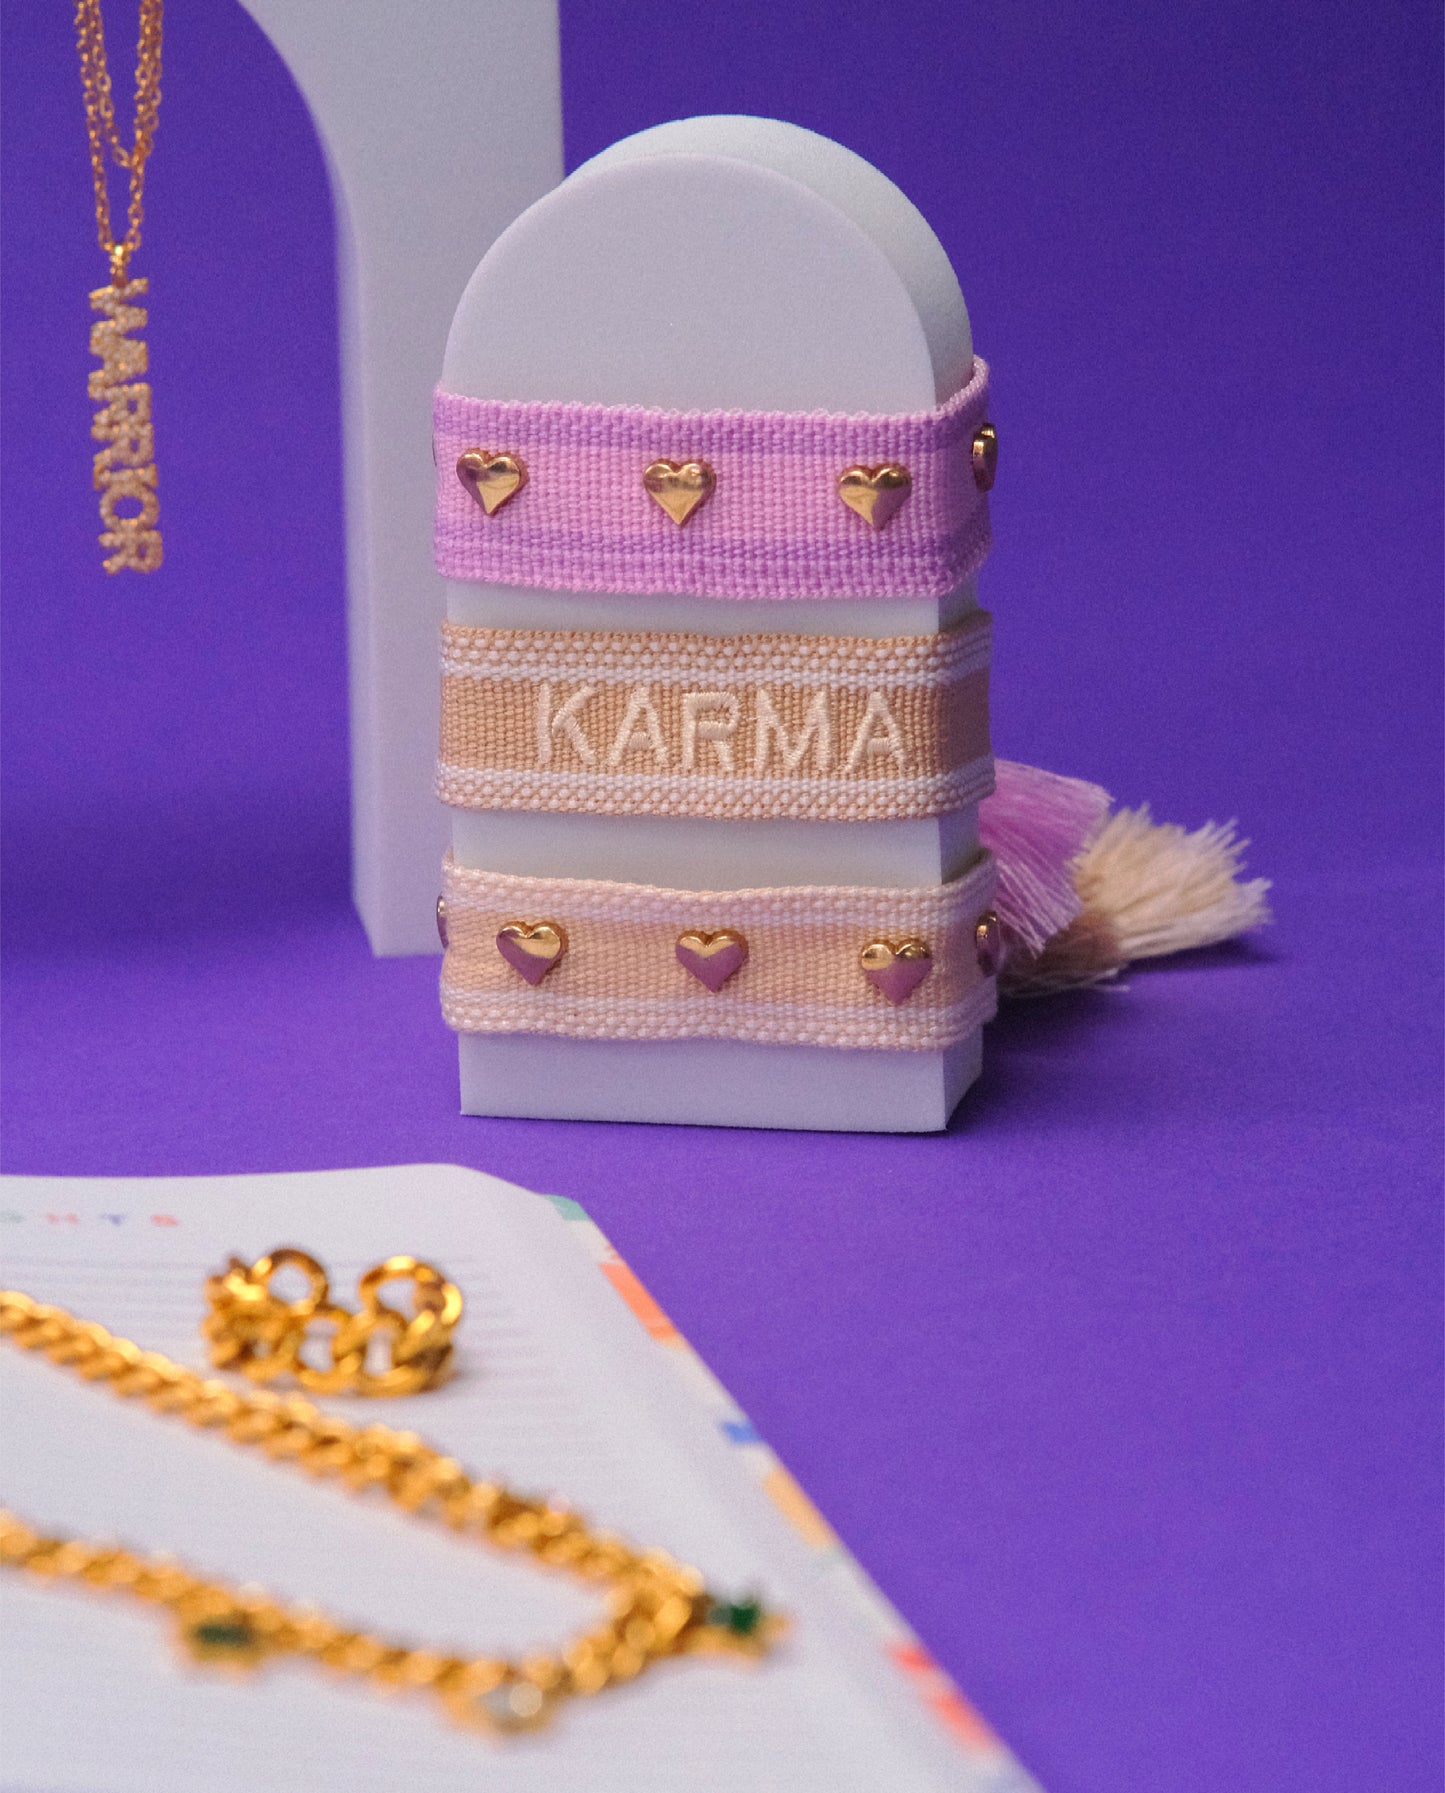 Bohemian Karma Adjustable Bracelet